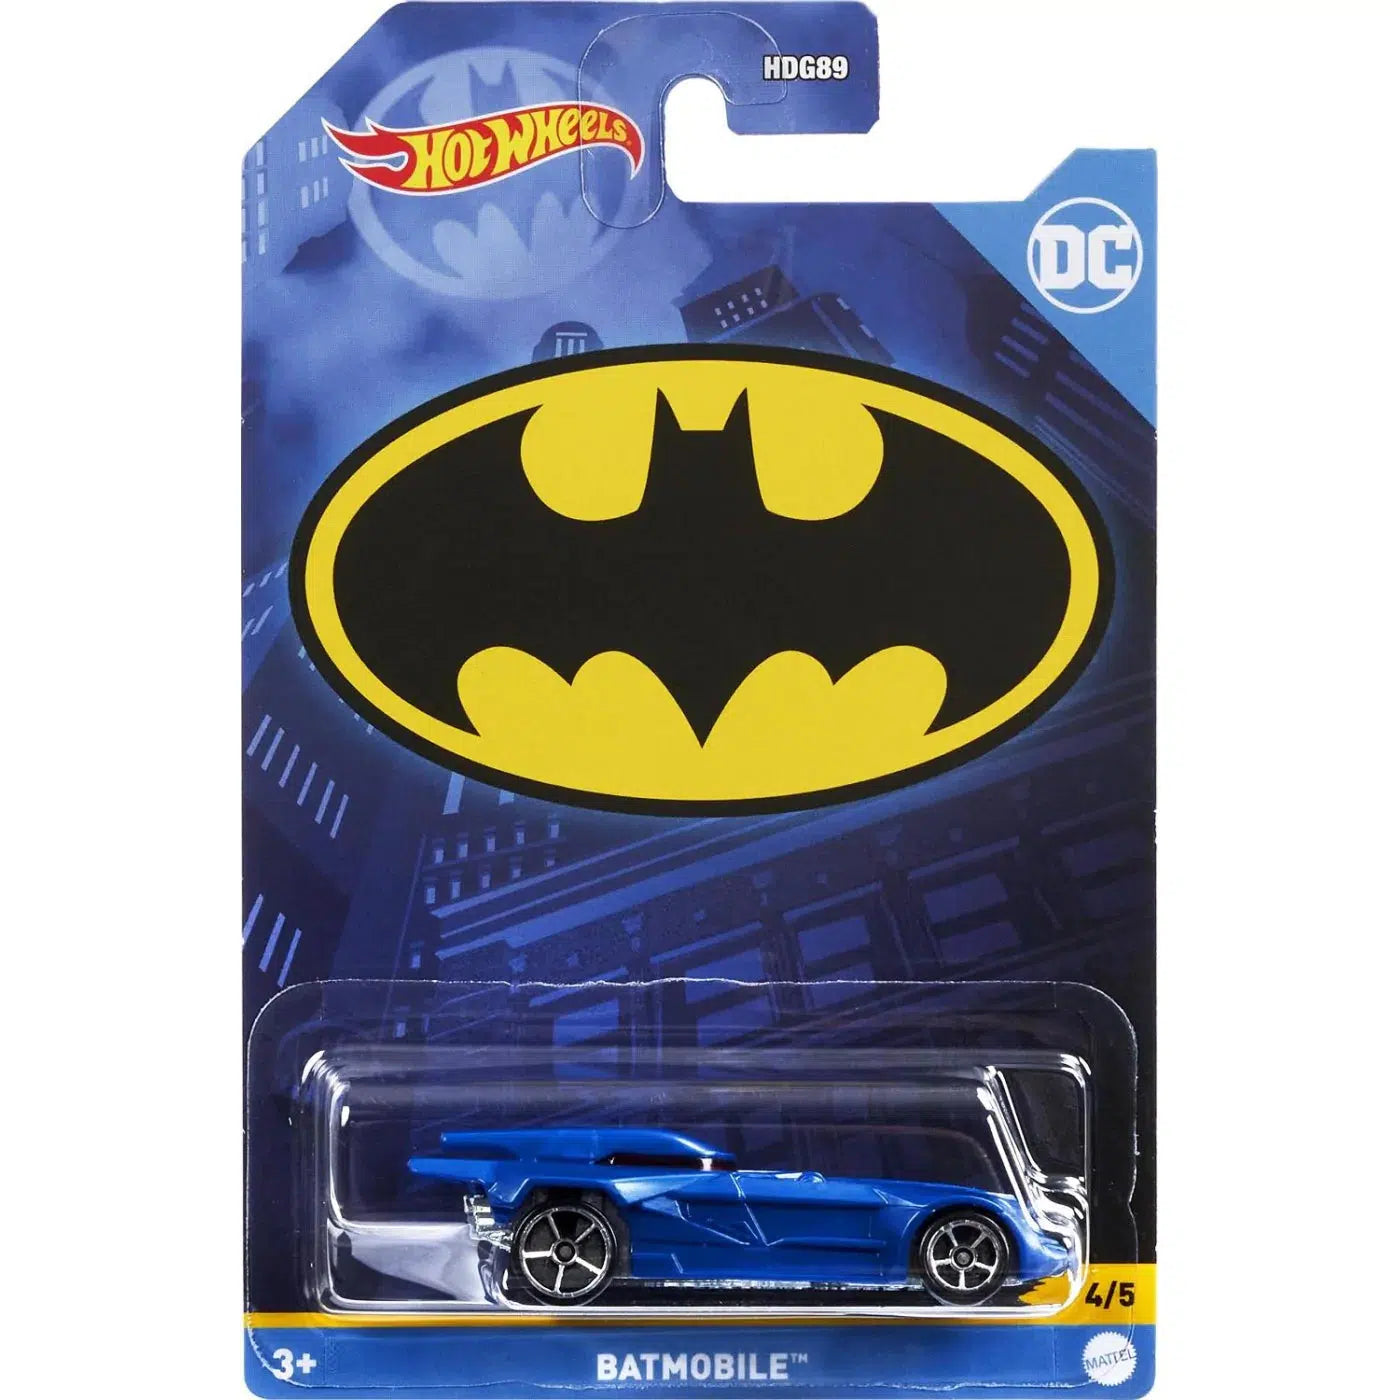 Buy Hot Wheels Batman Vehicles 5 Pack - Online at Cherry Lane